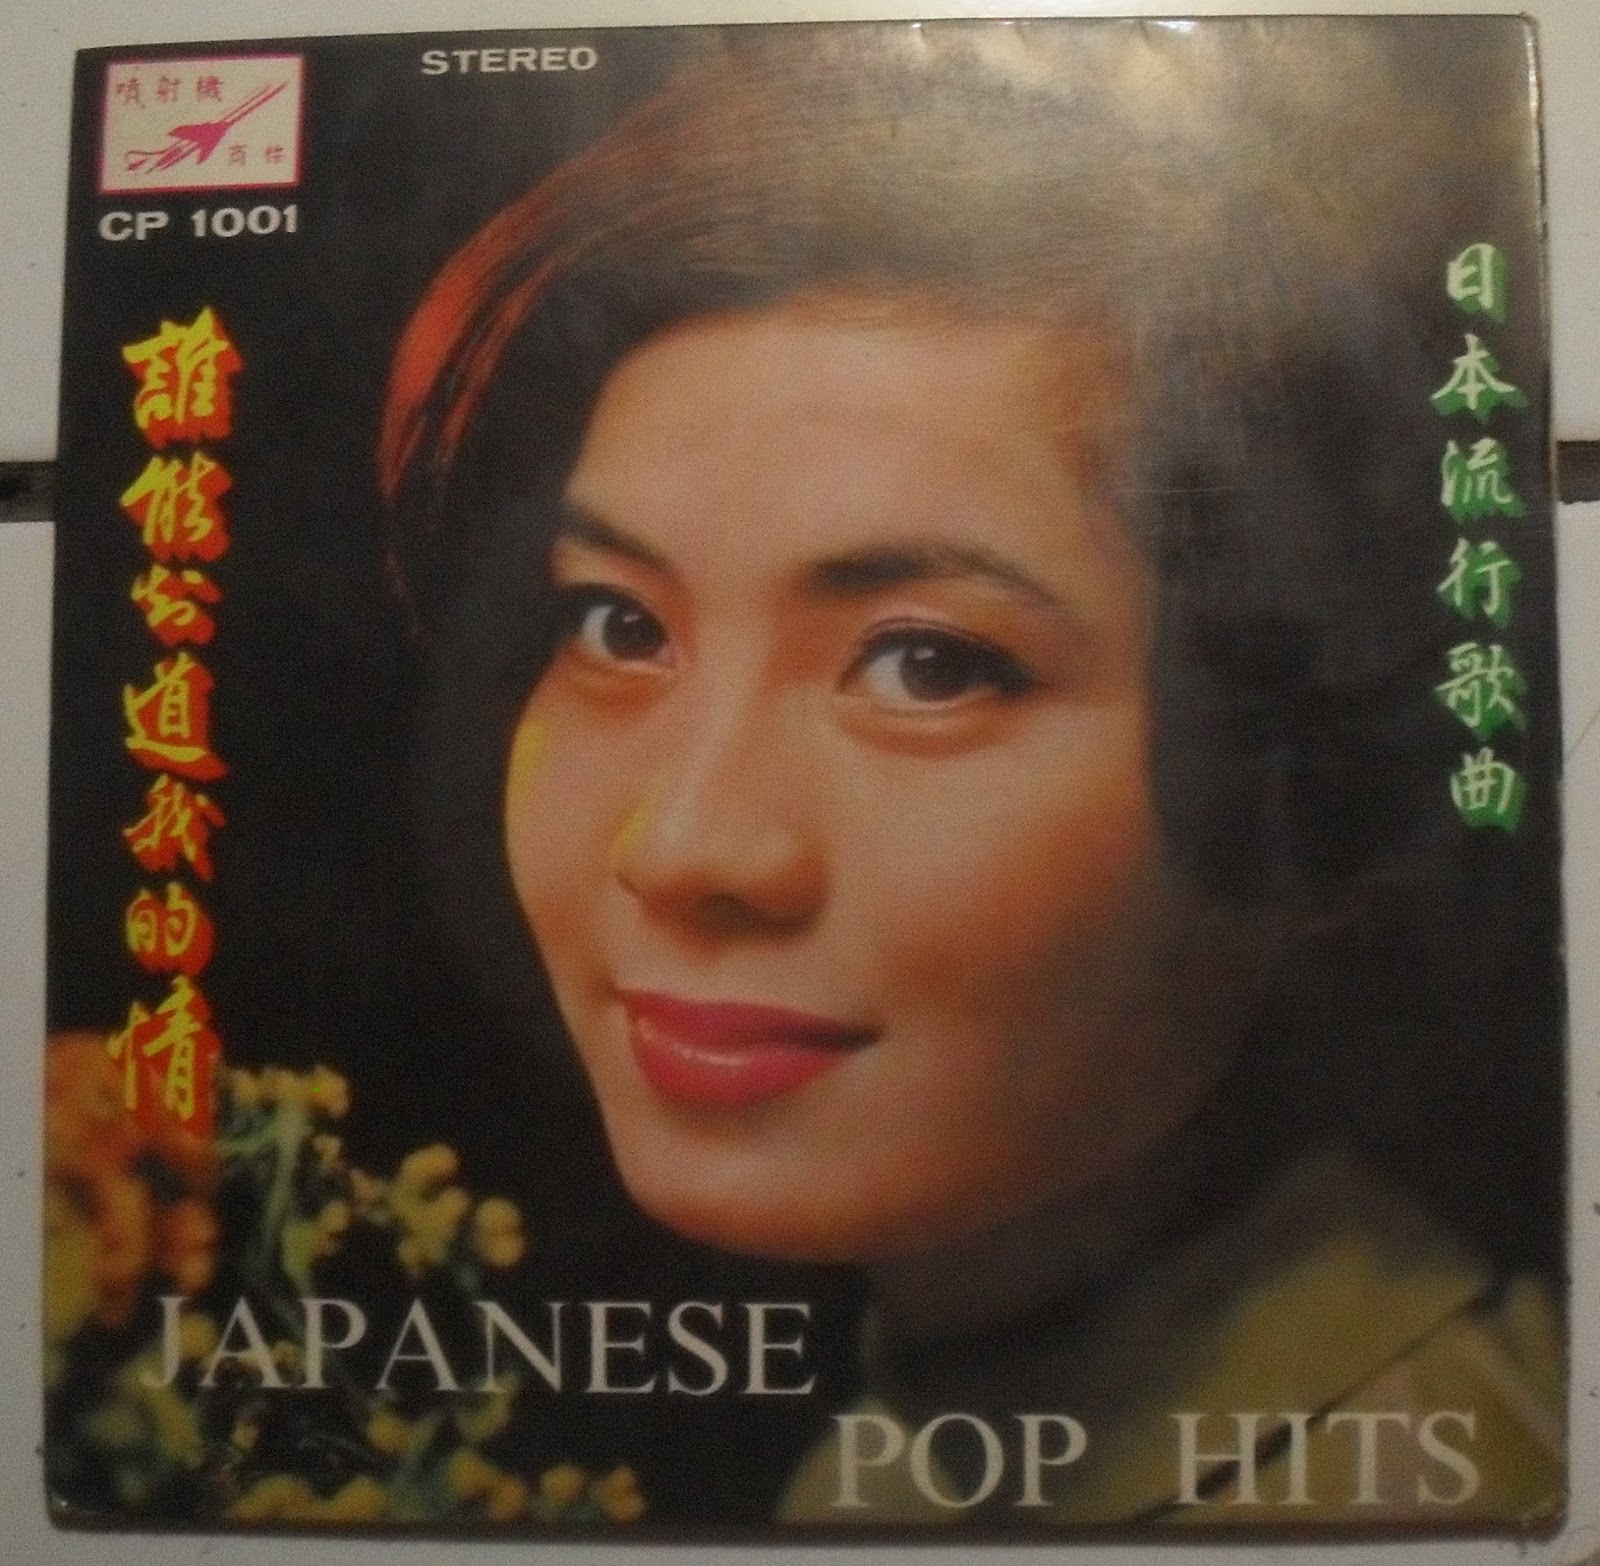 Madrotter Treasure Hunt JAPANESE POP HITS